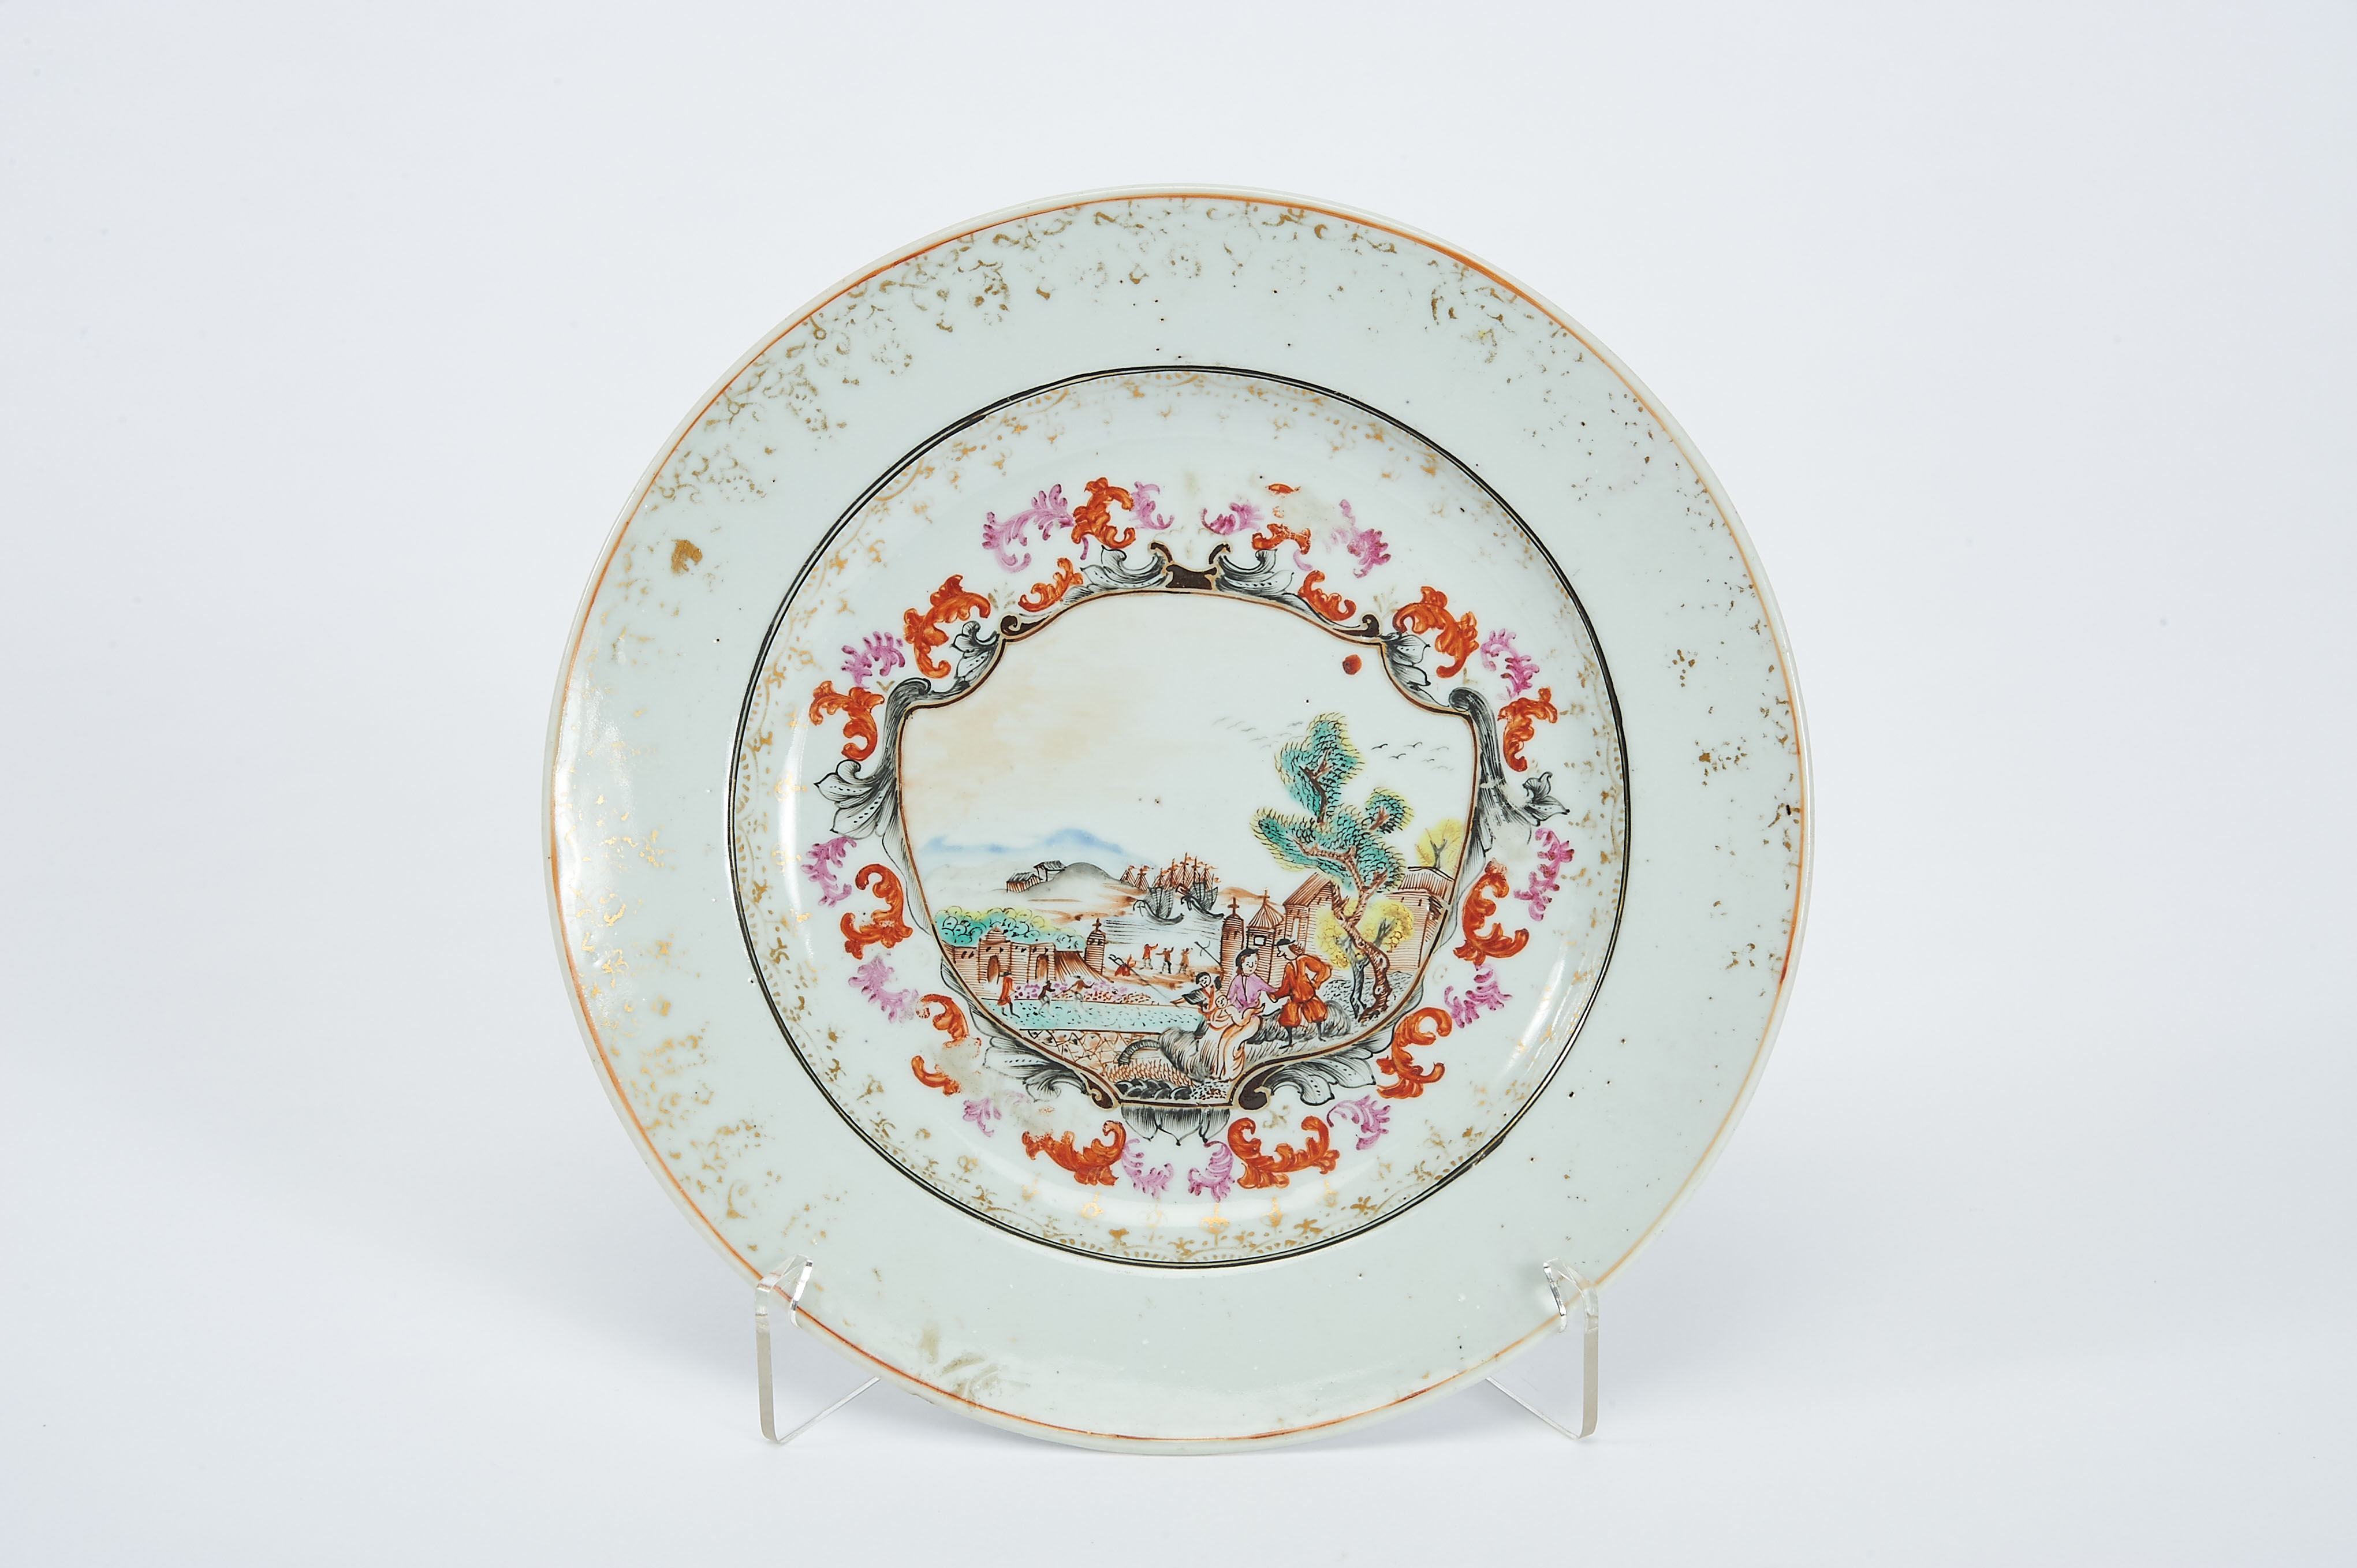 A Dish, Chinese export porcelain, polychrome na gilt decoration "Landscape with European figures